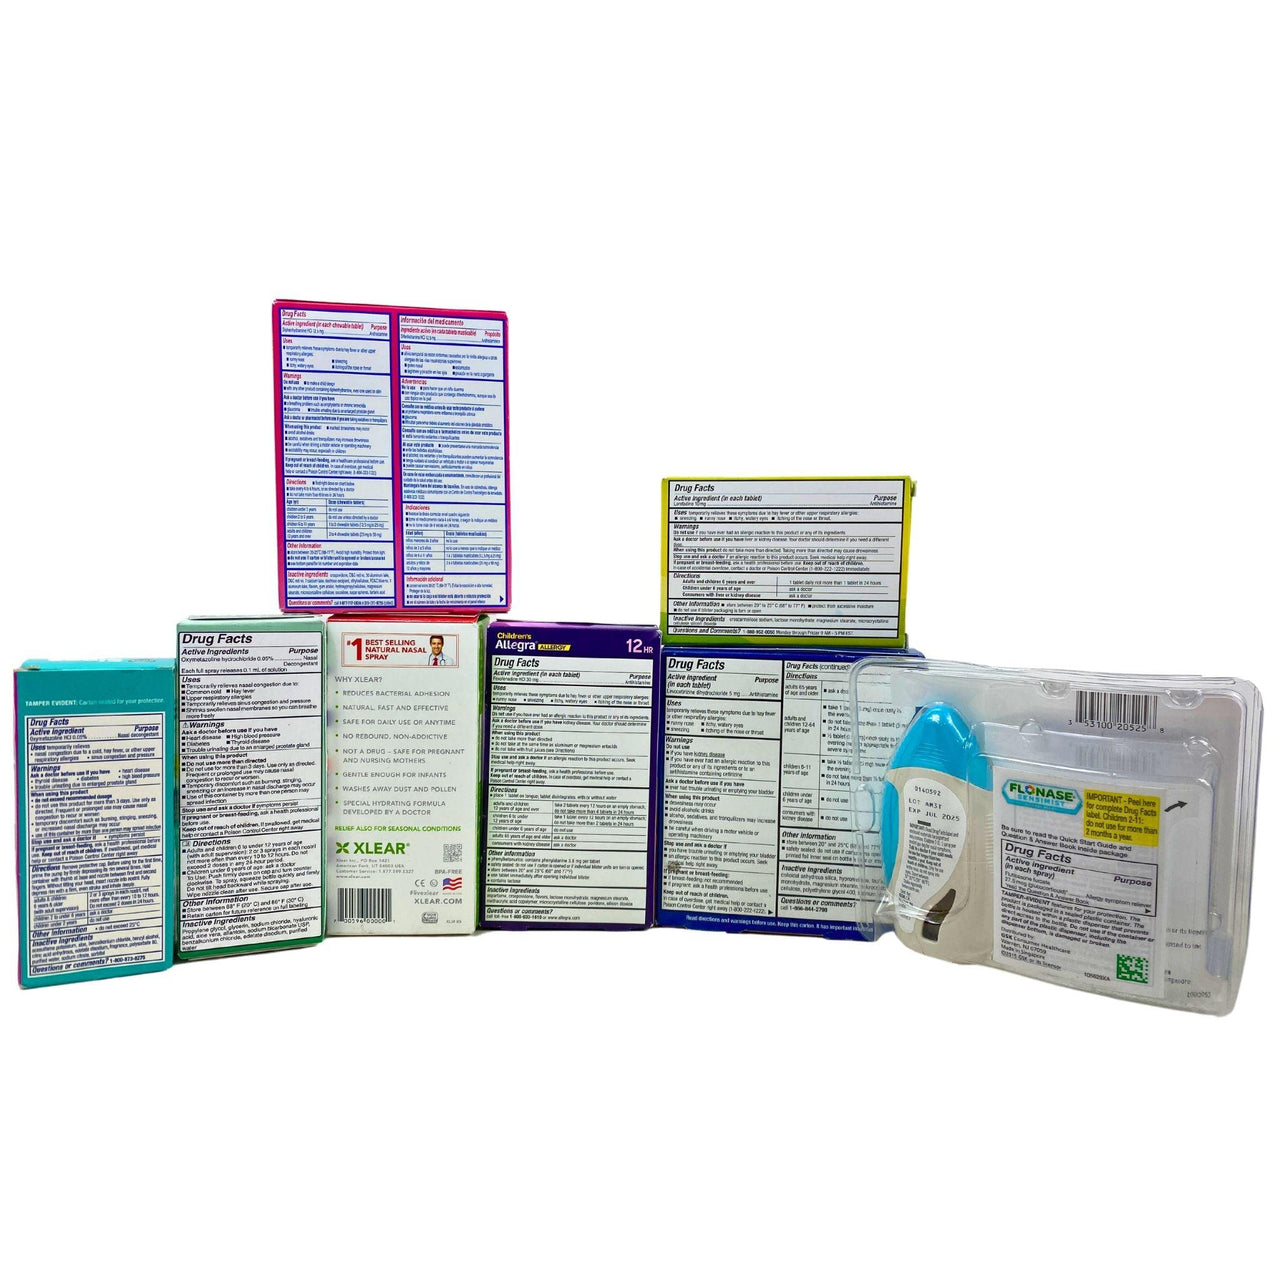 Allergy Relief Mix - for Children & Adults (40 Pcs Lot) - Discount Wholesalers Inc